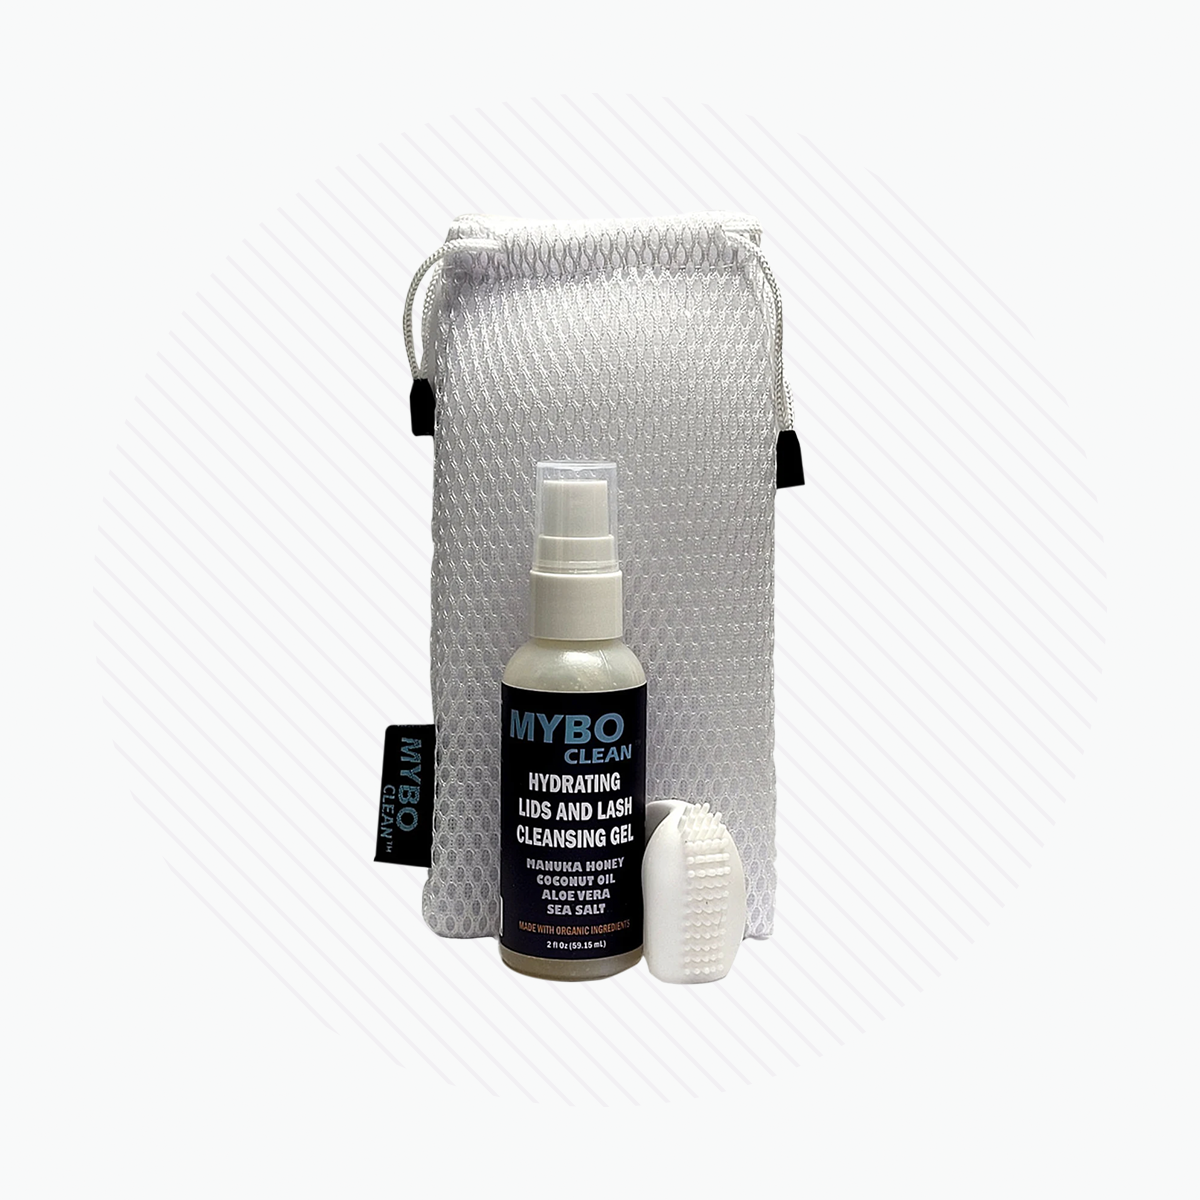 MyboClean "On the Go" Brush with Hydrating Gel + Travel Bag (1 Brush + 1 Bottle)